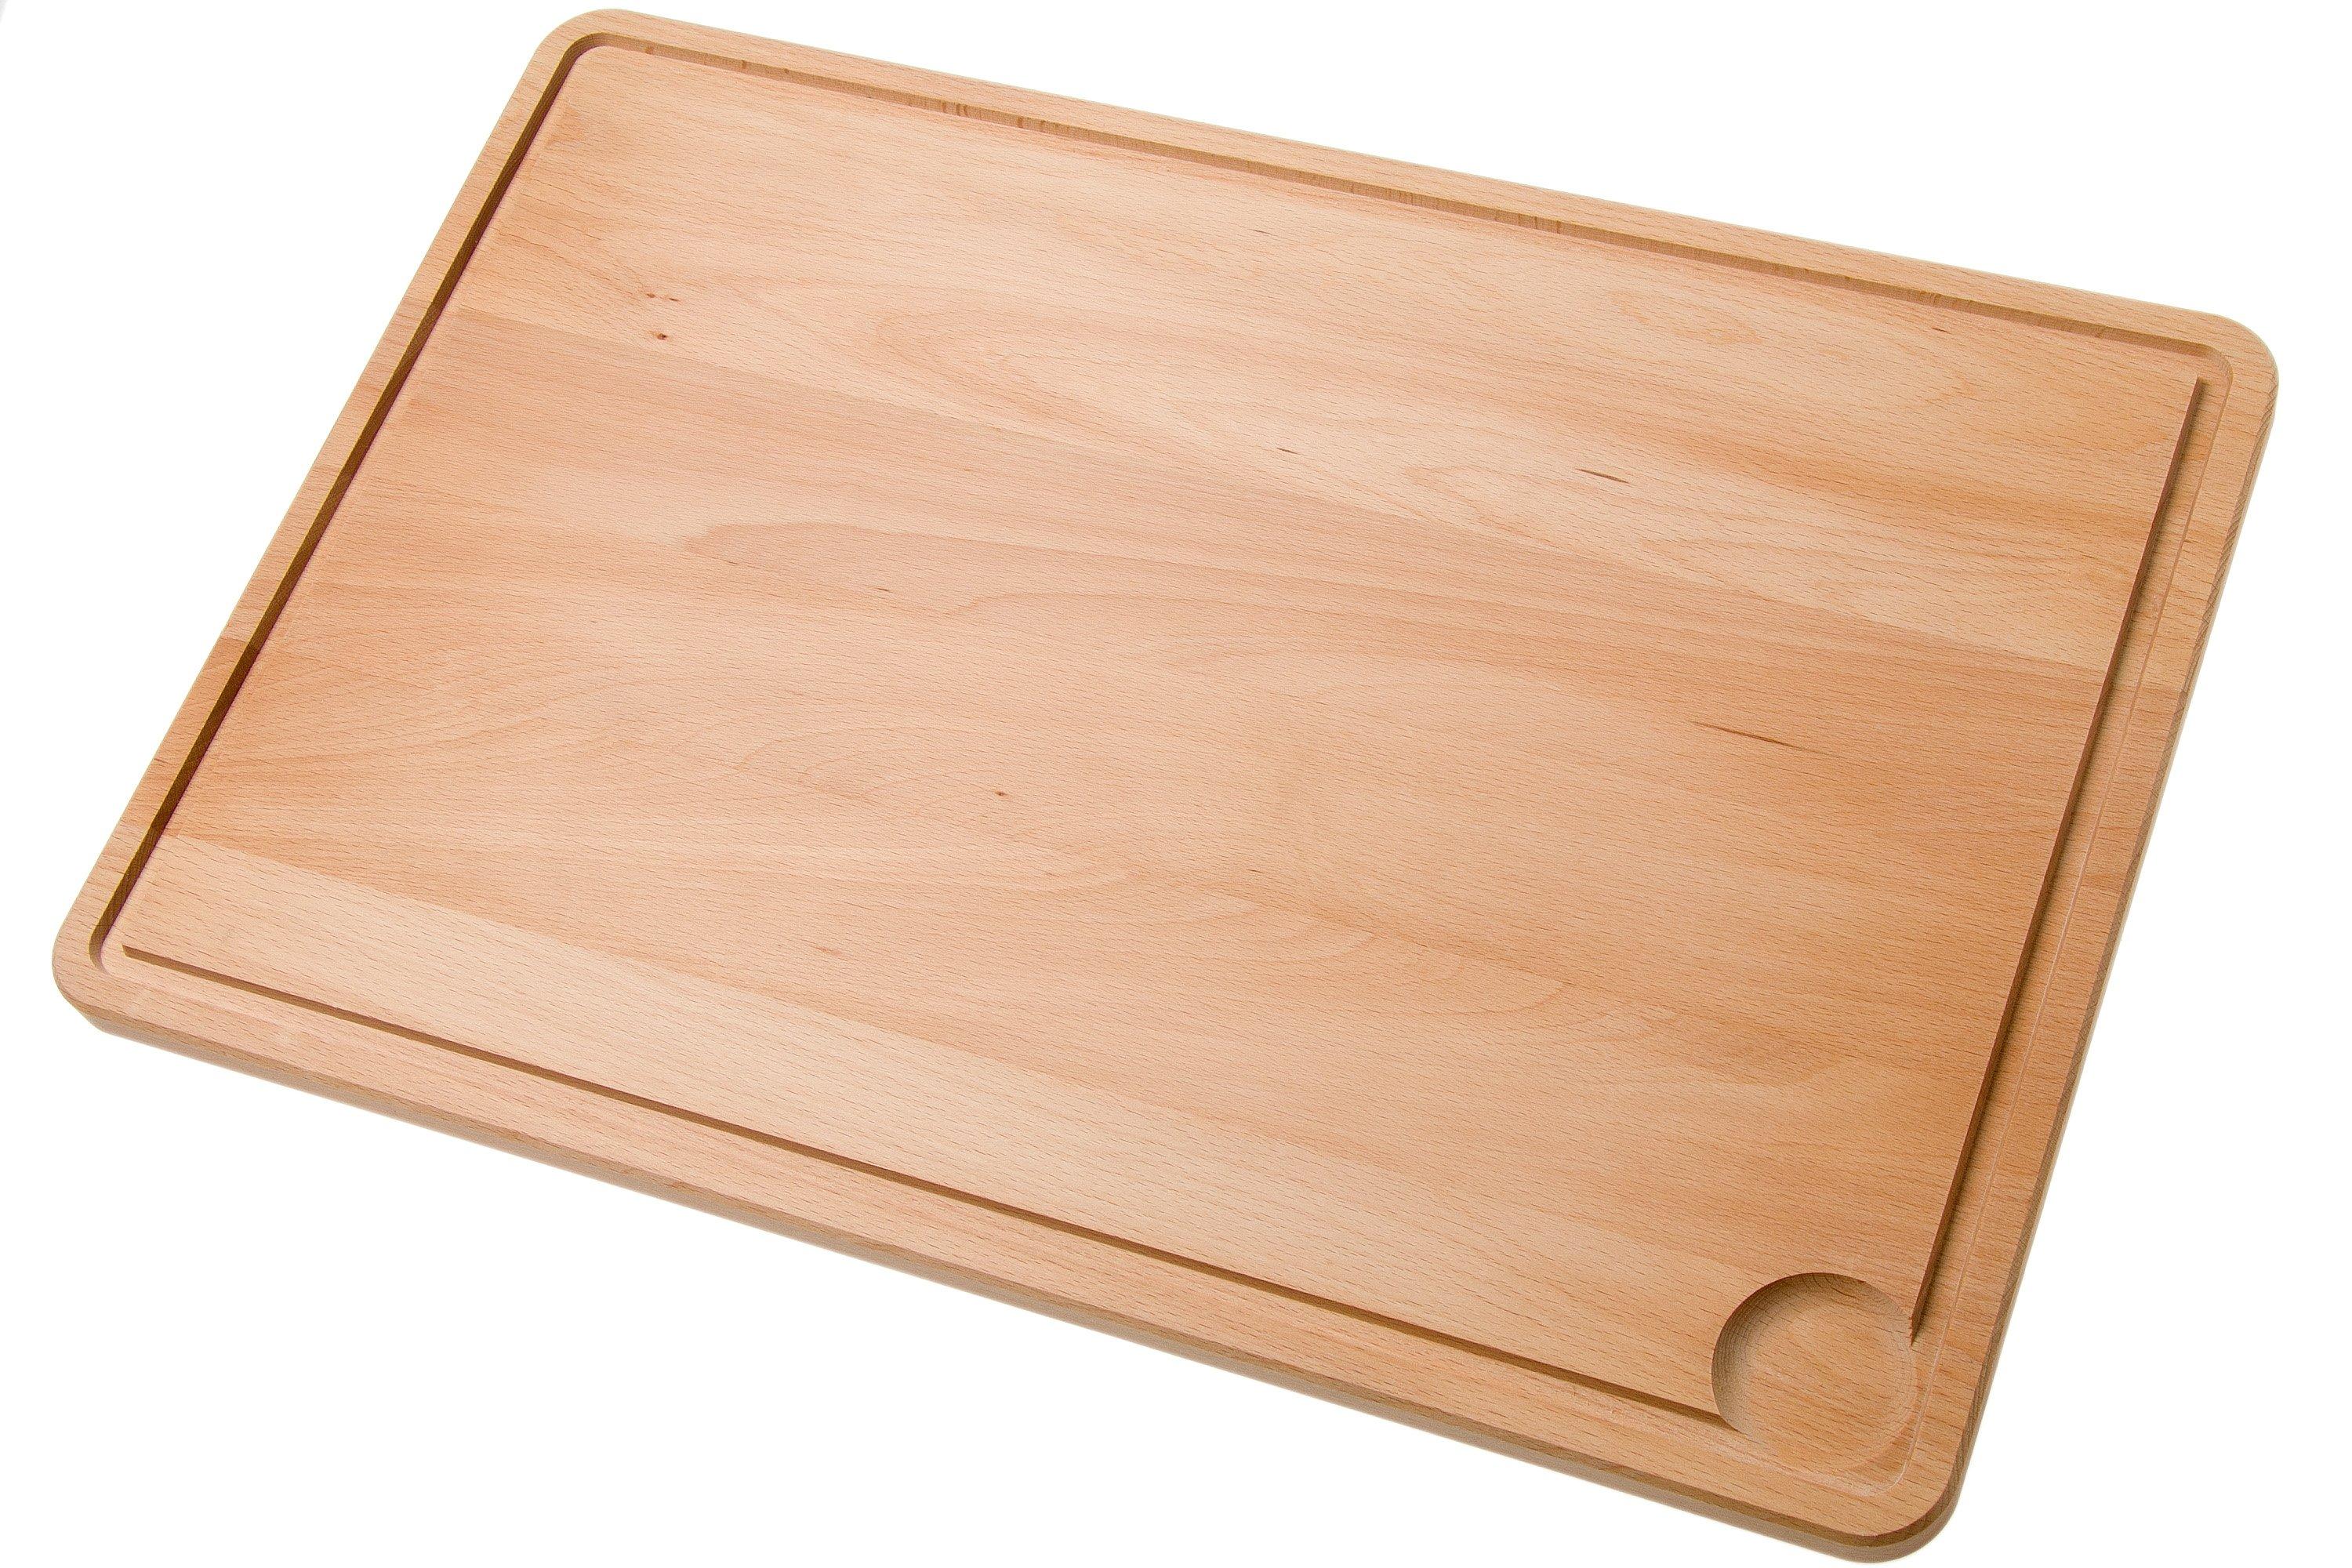 Pardon Panorama kwaliteit Il Cucinino cutting board with slot, beech wood 60x40 cm | Advantageously  shopping at Knivesandtools.com